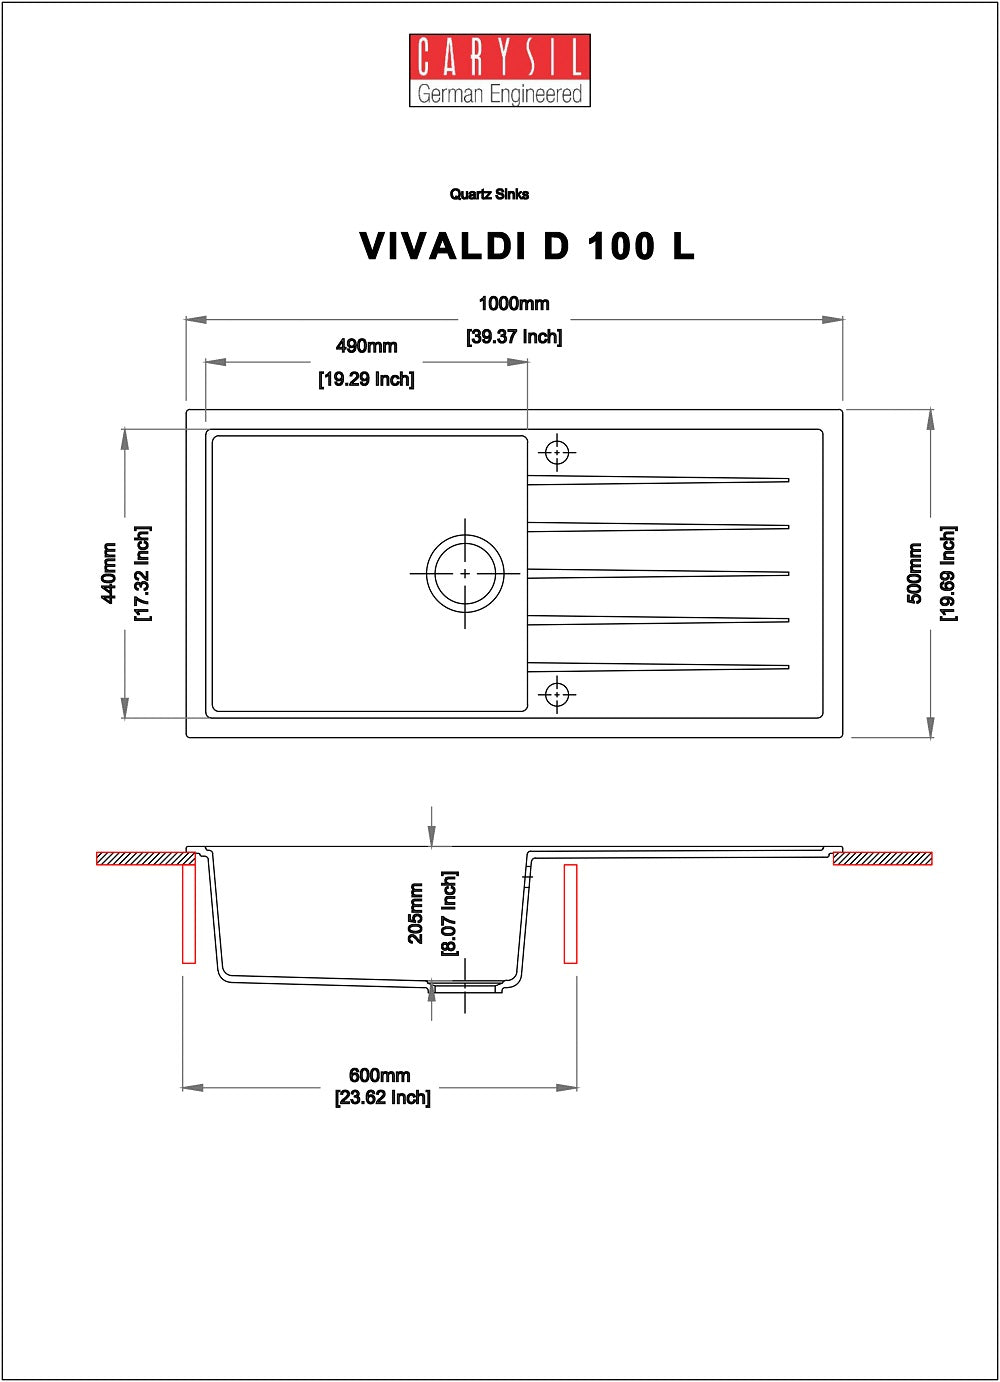 Carysil Granite Quartz Kitchen Sink - Single Bowl With Drainboard Vivaldi D100L 36" x 18" Inch - InArt-Studio